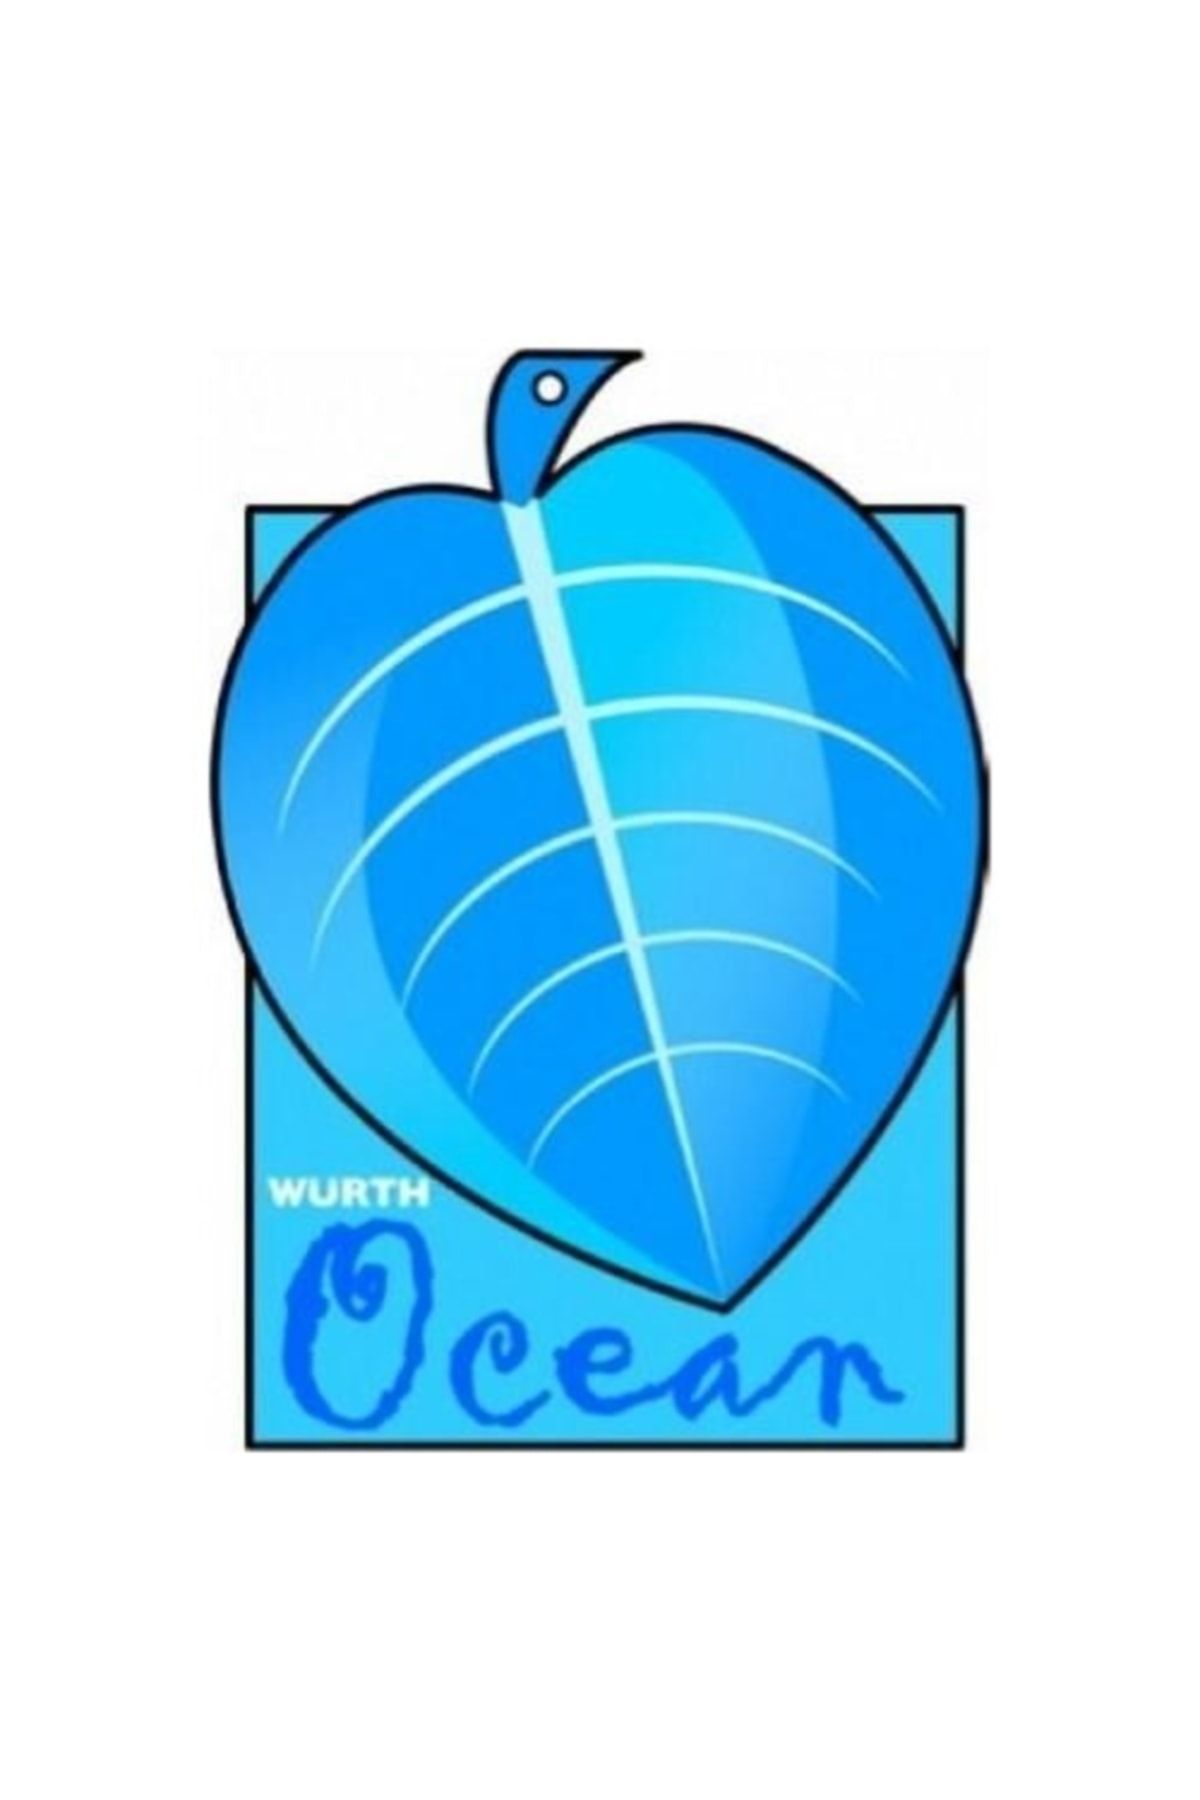 Würth Asma Koku Ocean/okyanus Ferahlığı